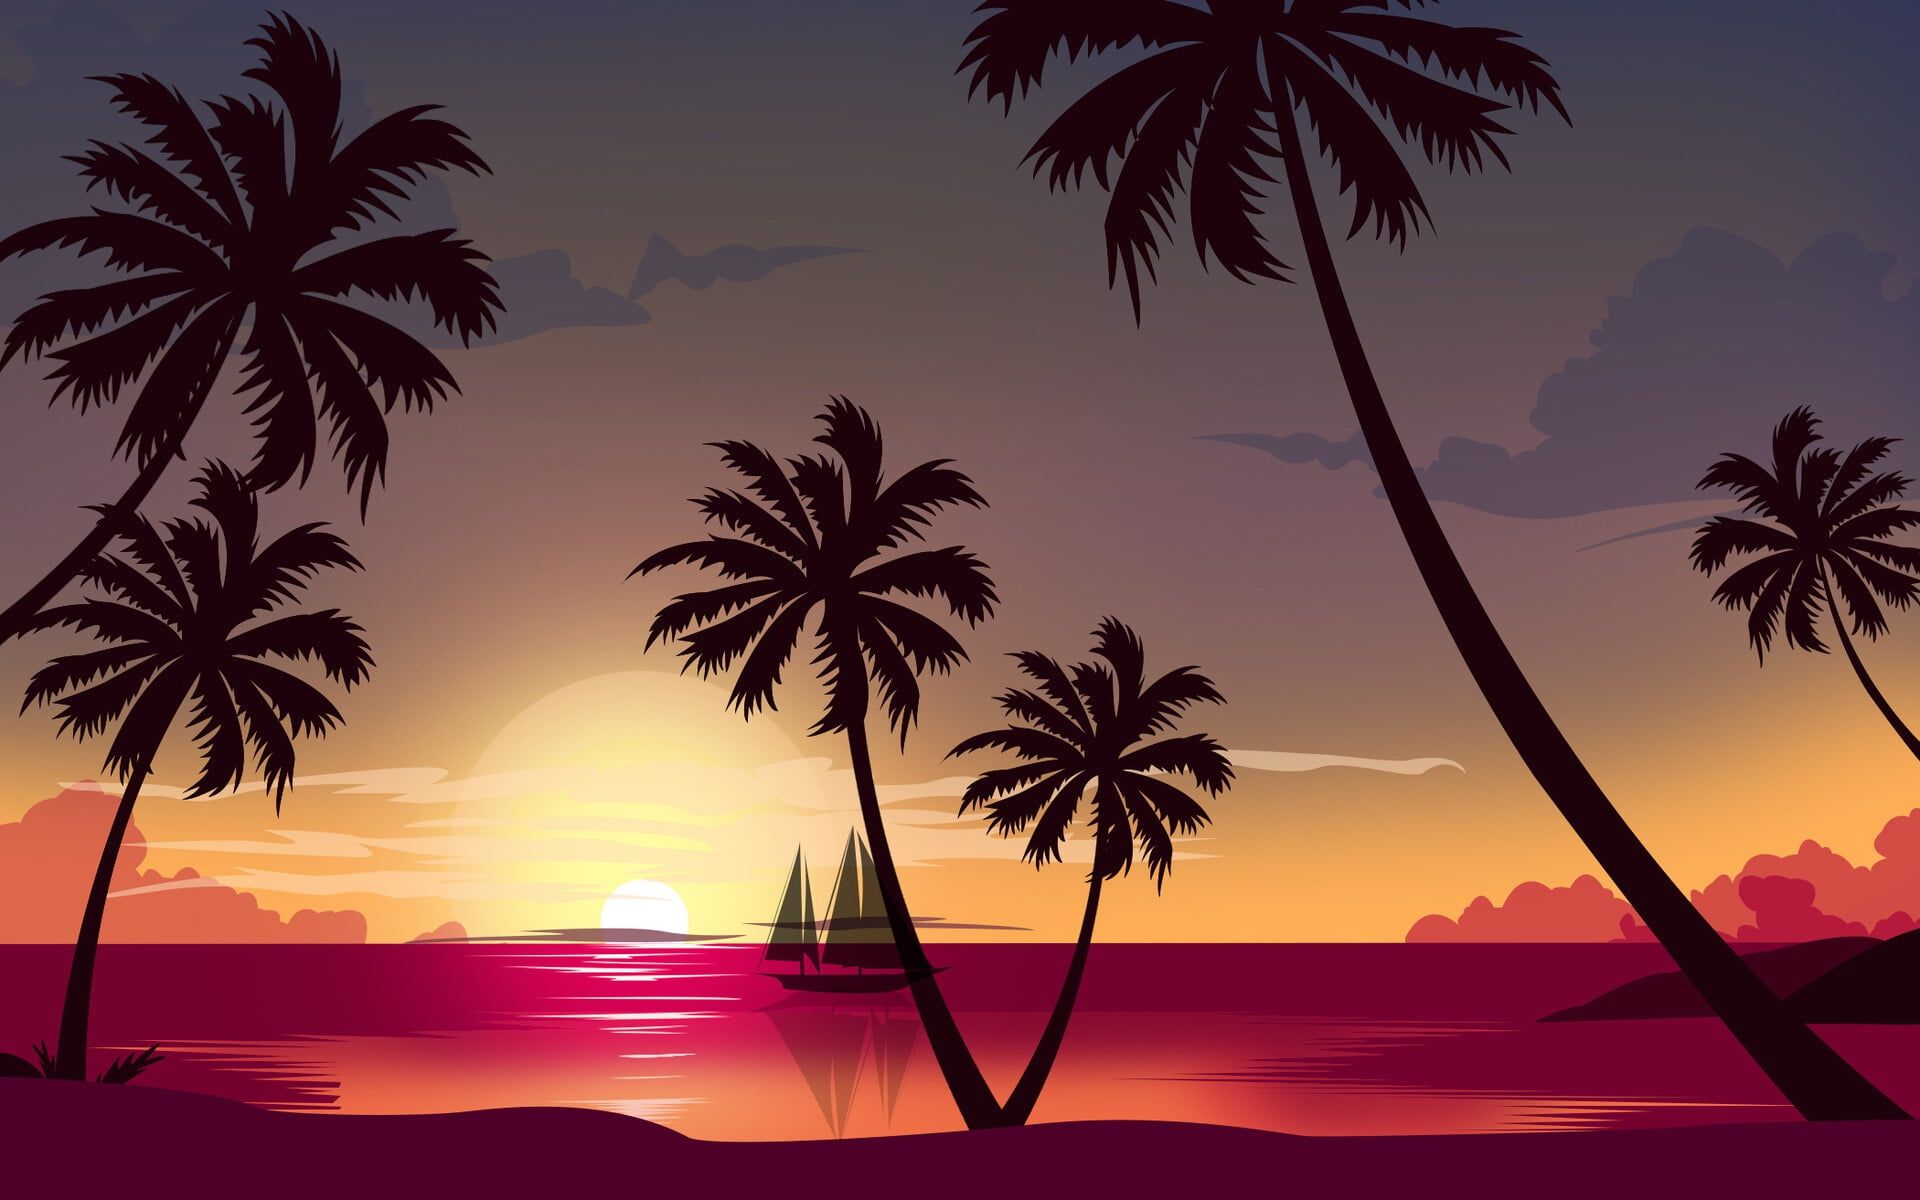 Sunset The sun The ocean #Sea #Beach #Minimalism #Palma #Ship #Style Palm trees s #Style #Ocean #Illustration #Sea #Palm '. HD wallpaper, Sunset, Wallpaper